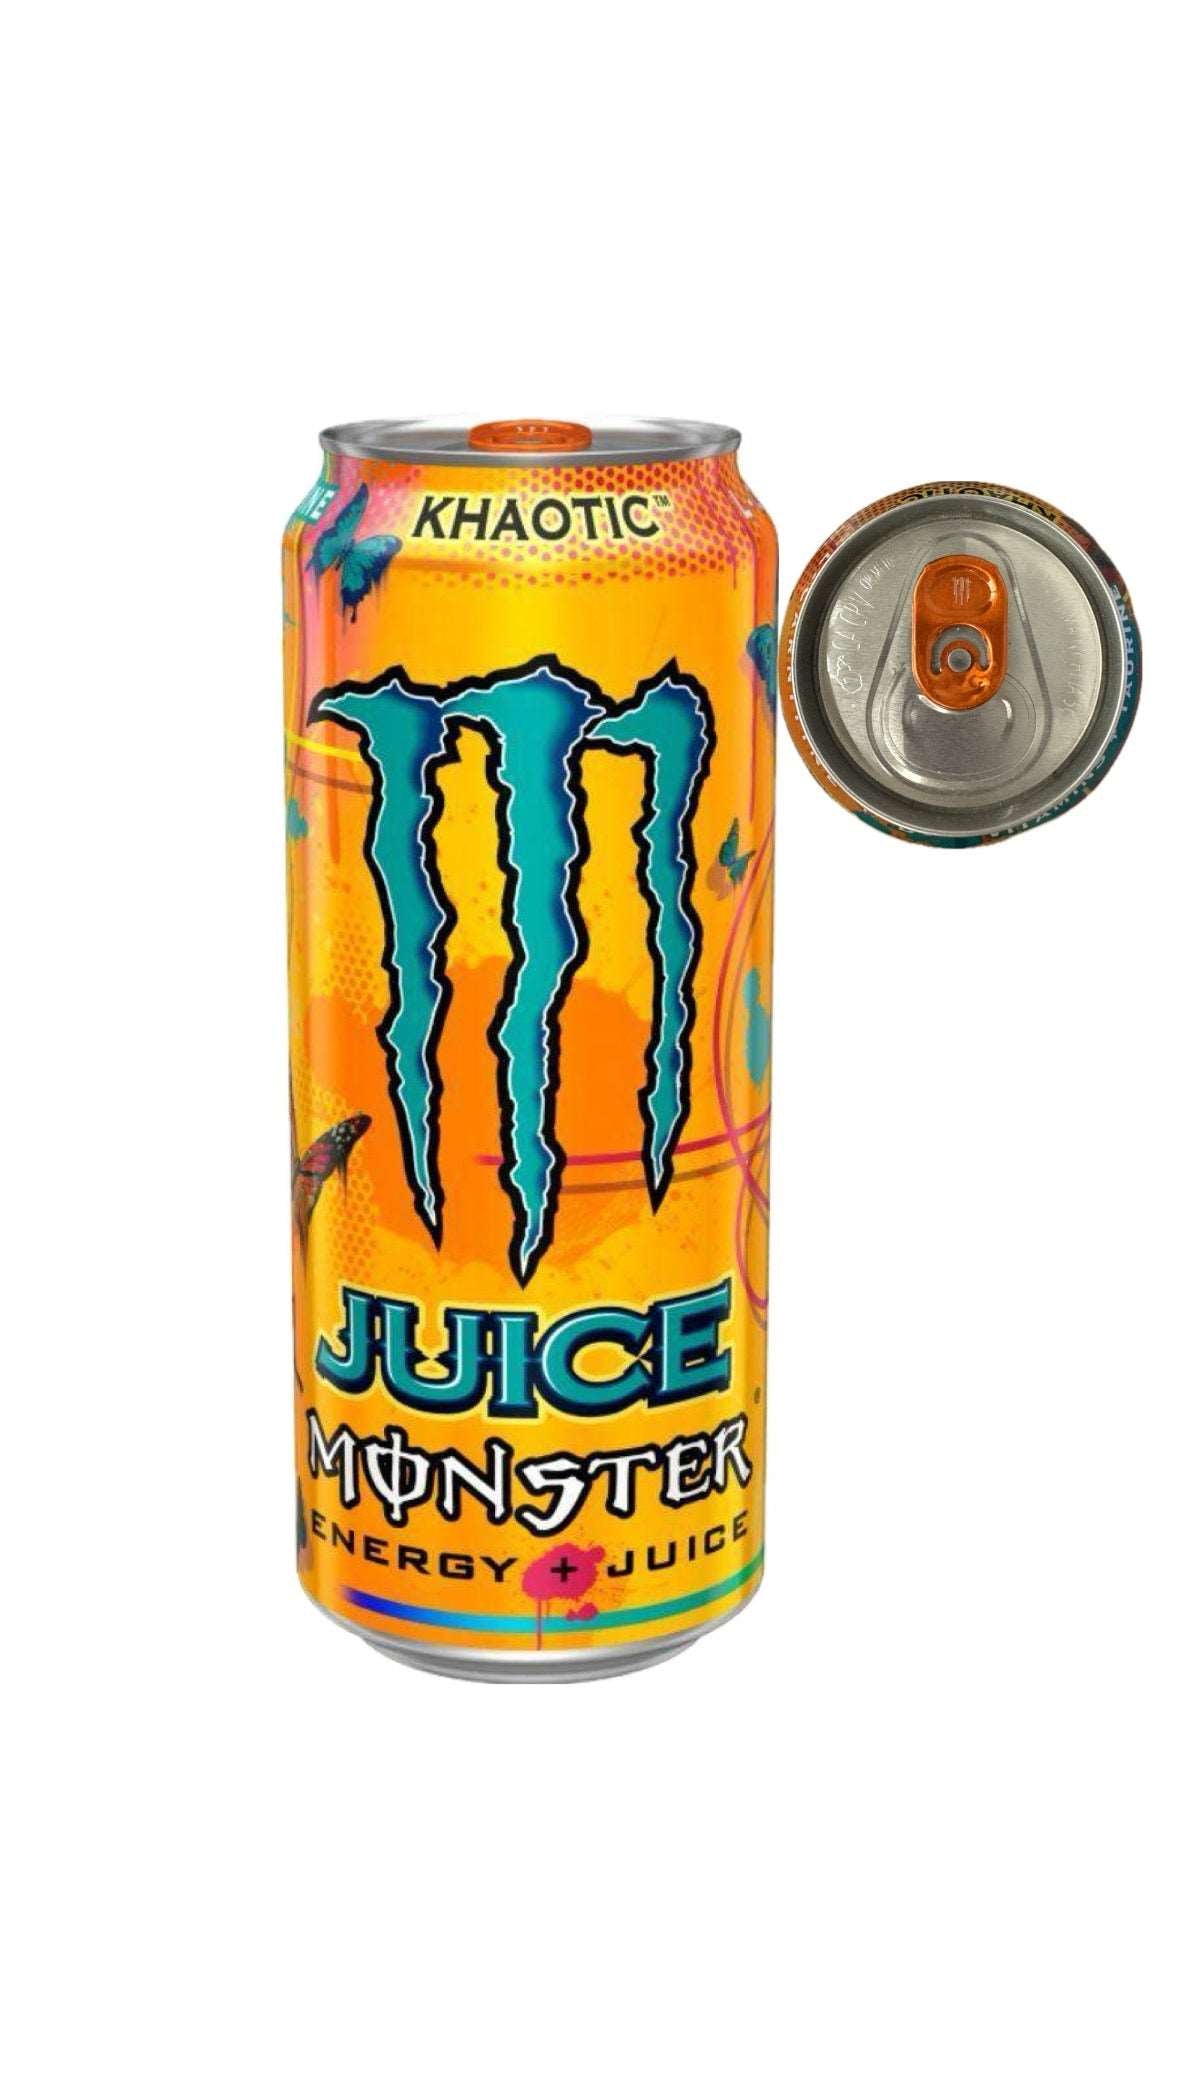 Monster Energy Juice Khaotic USA sku: 0321 B N